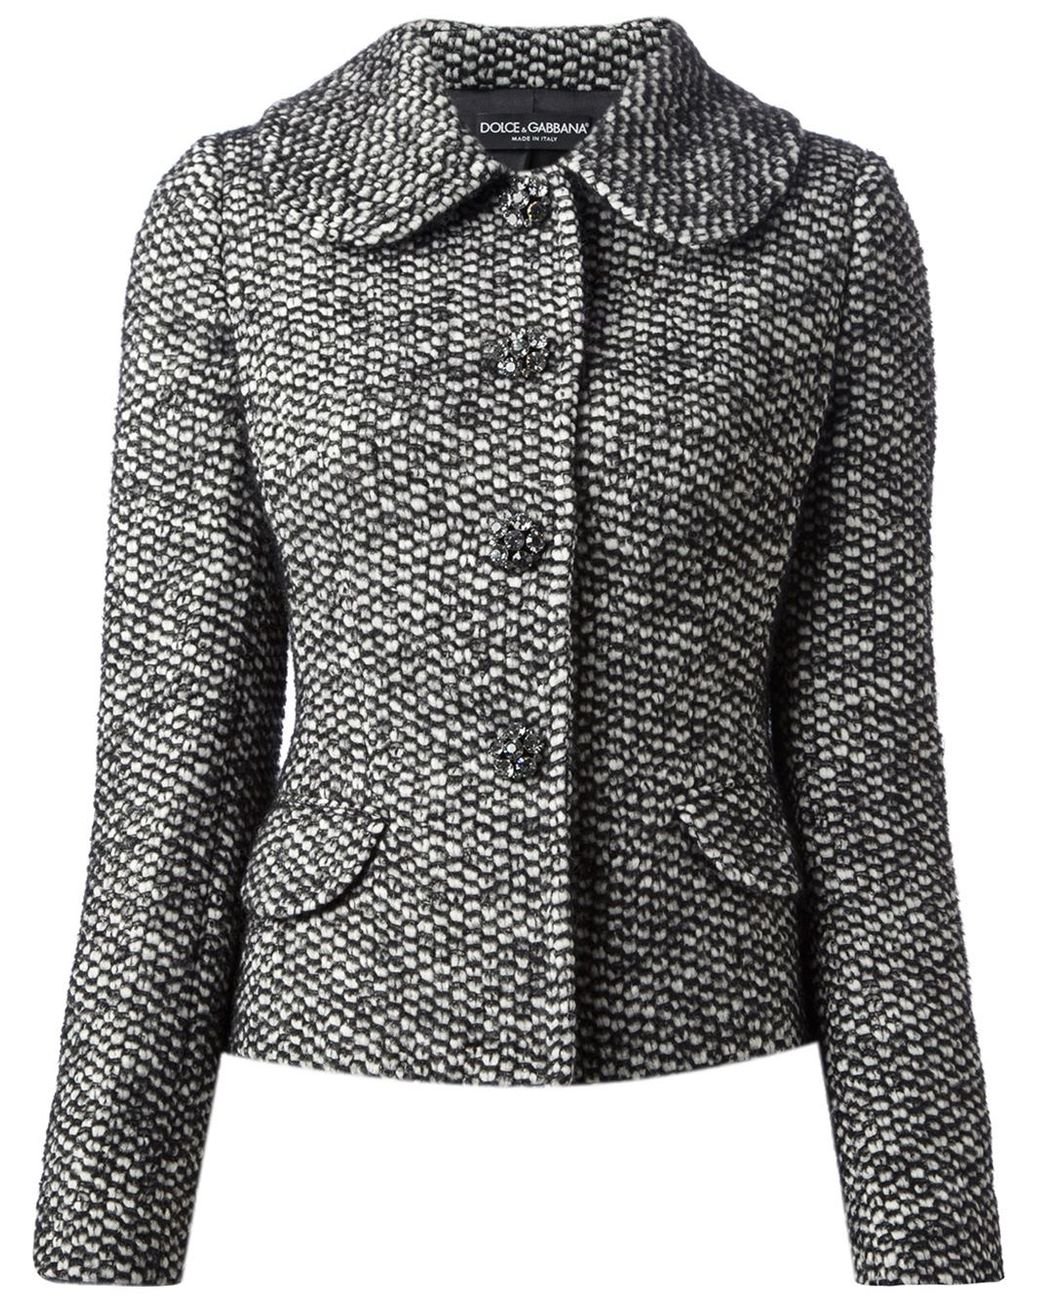 Dolce & Gabbana Tweed Jacket in Black | Lyst